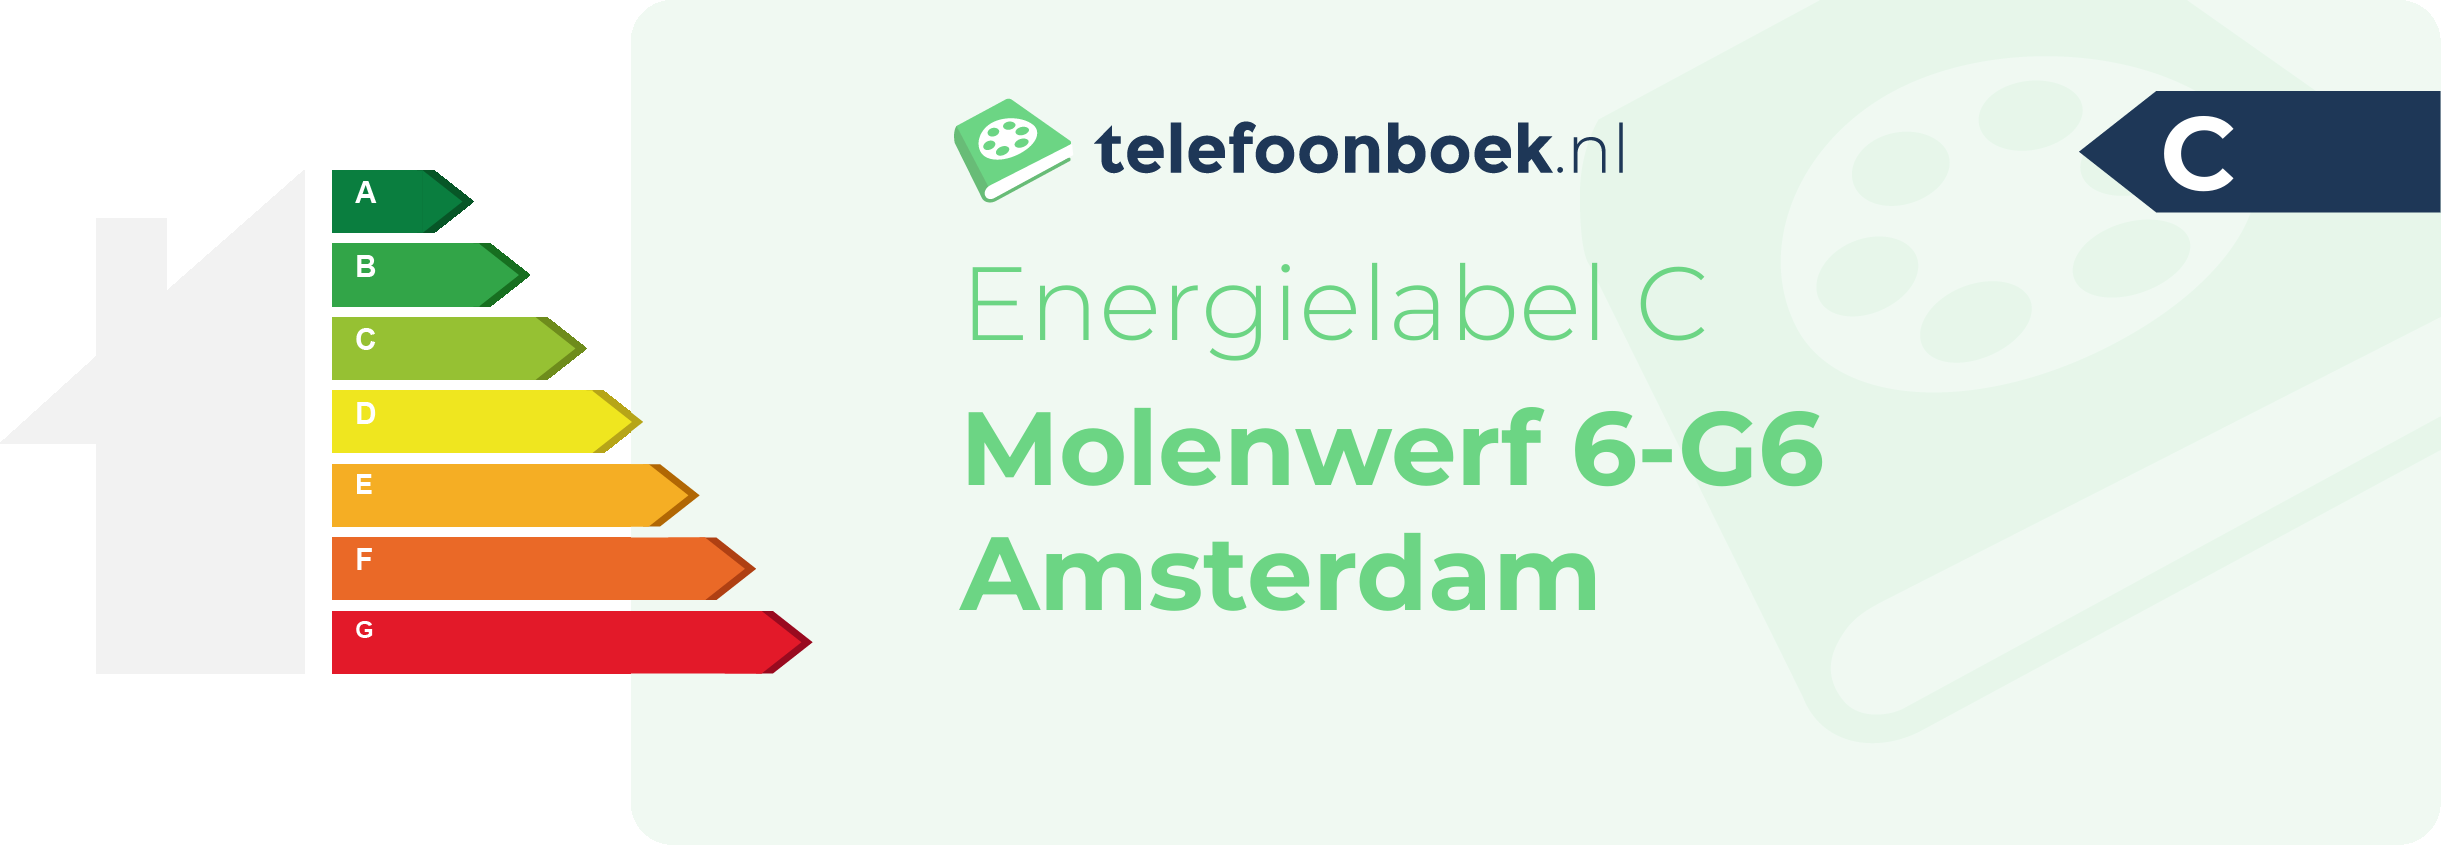 Energielabel Molenwerf 6-G6 Amsterdam